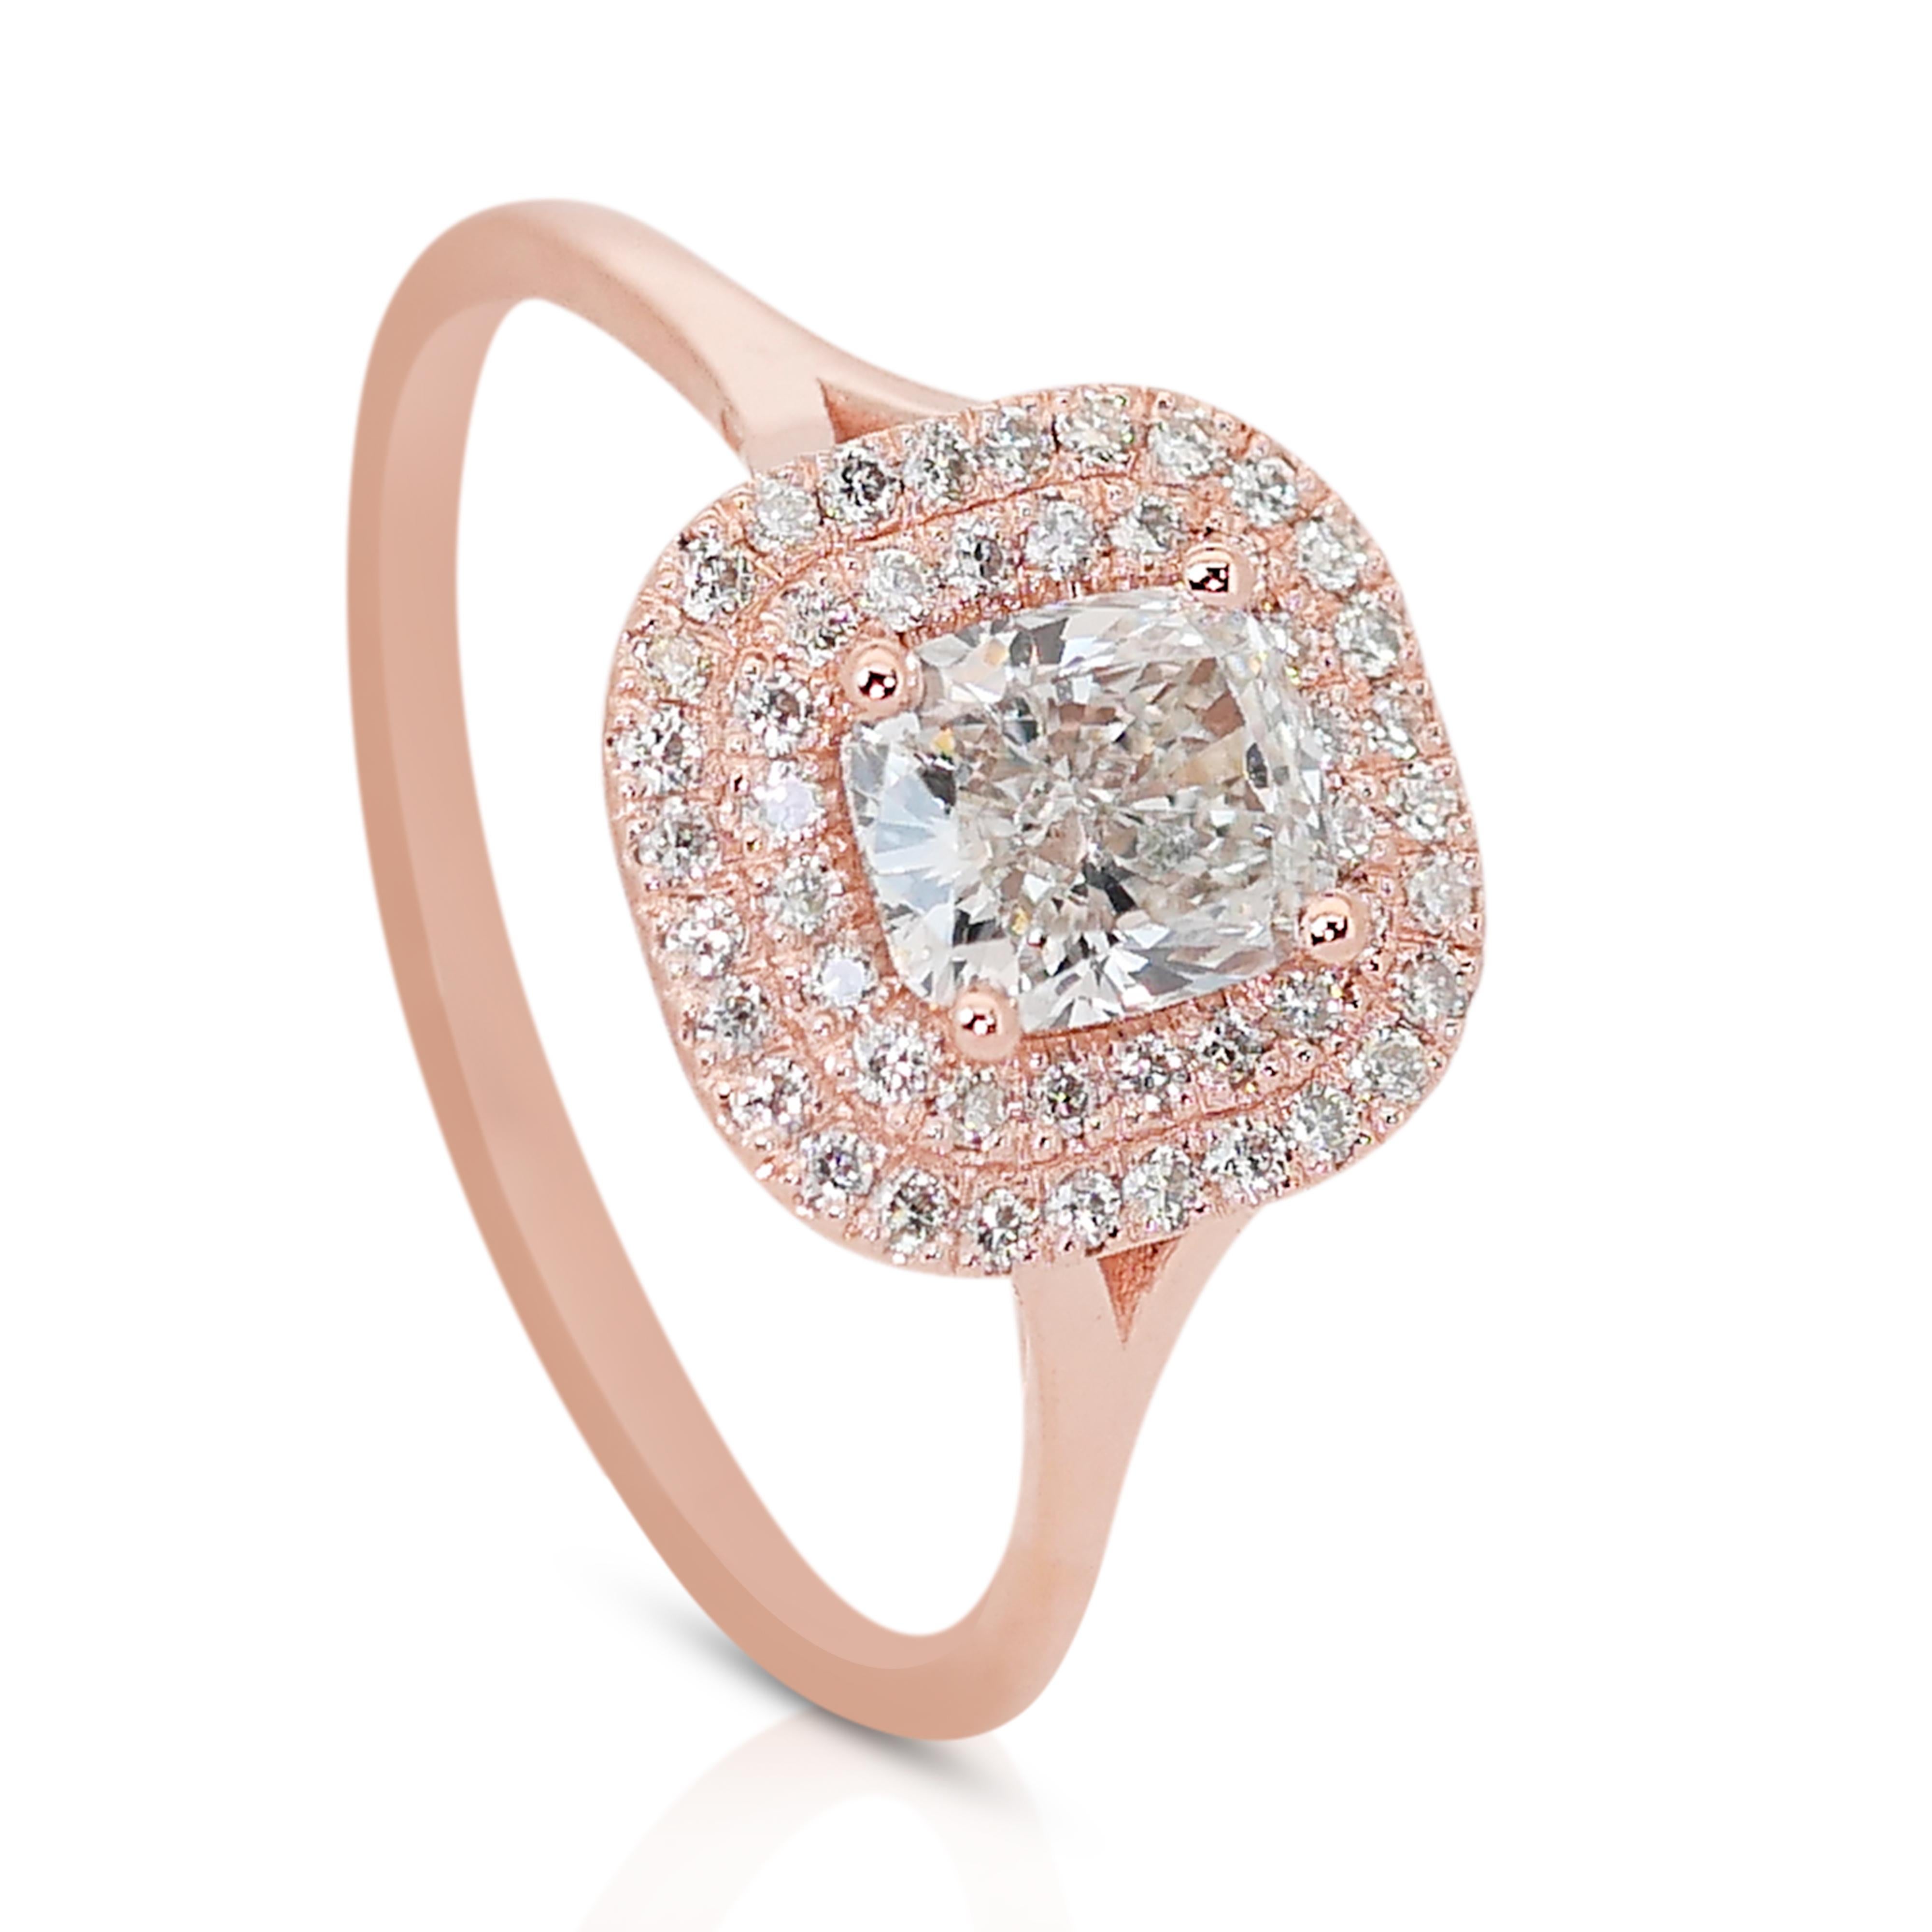 Cushion Cut Glamorous 14k Rose Gold Double Halo Diamond Ring w/1.09 ct - IGI Certified For Sale